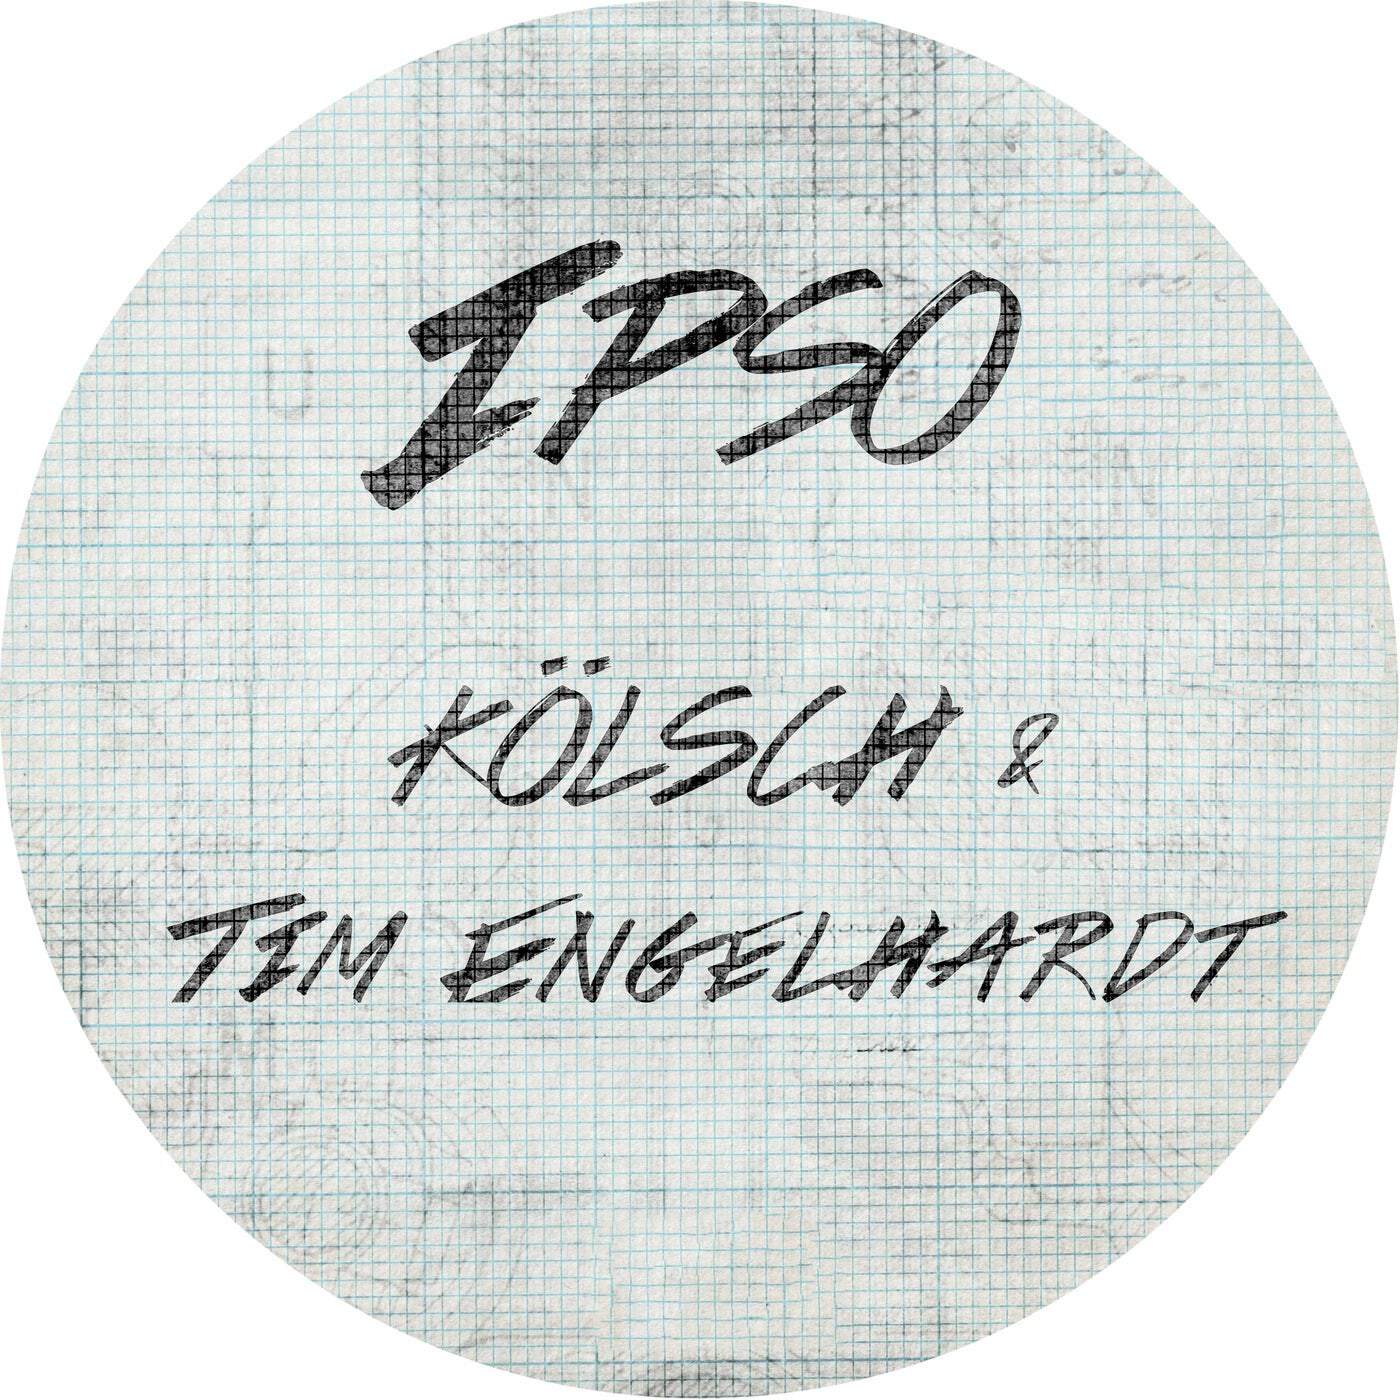 image cover: Kolsch, Tim Engelhardt - Looking Class / Full Circle Moment / IPSO009D